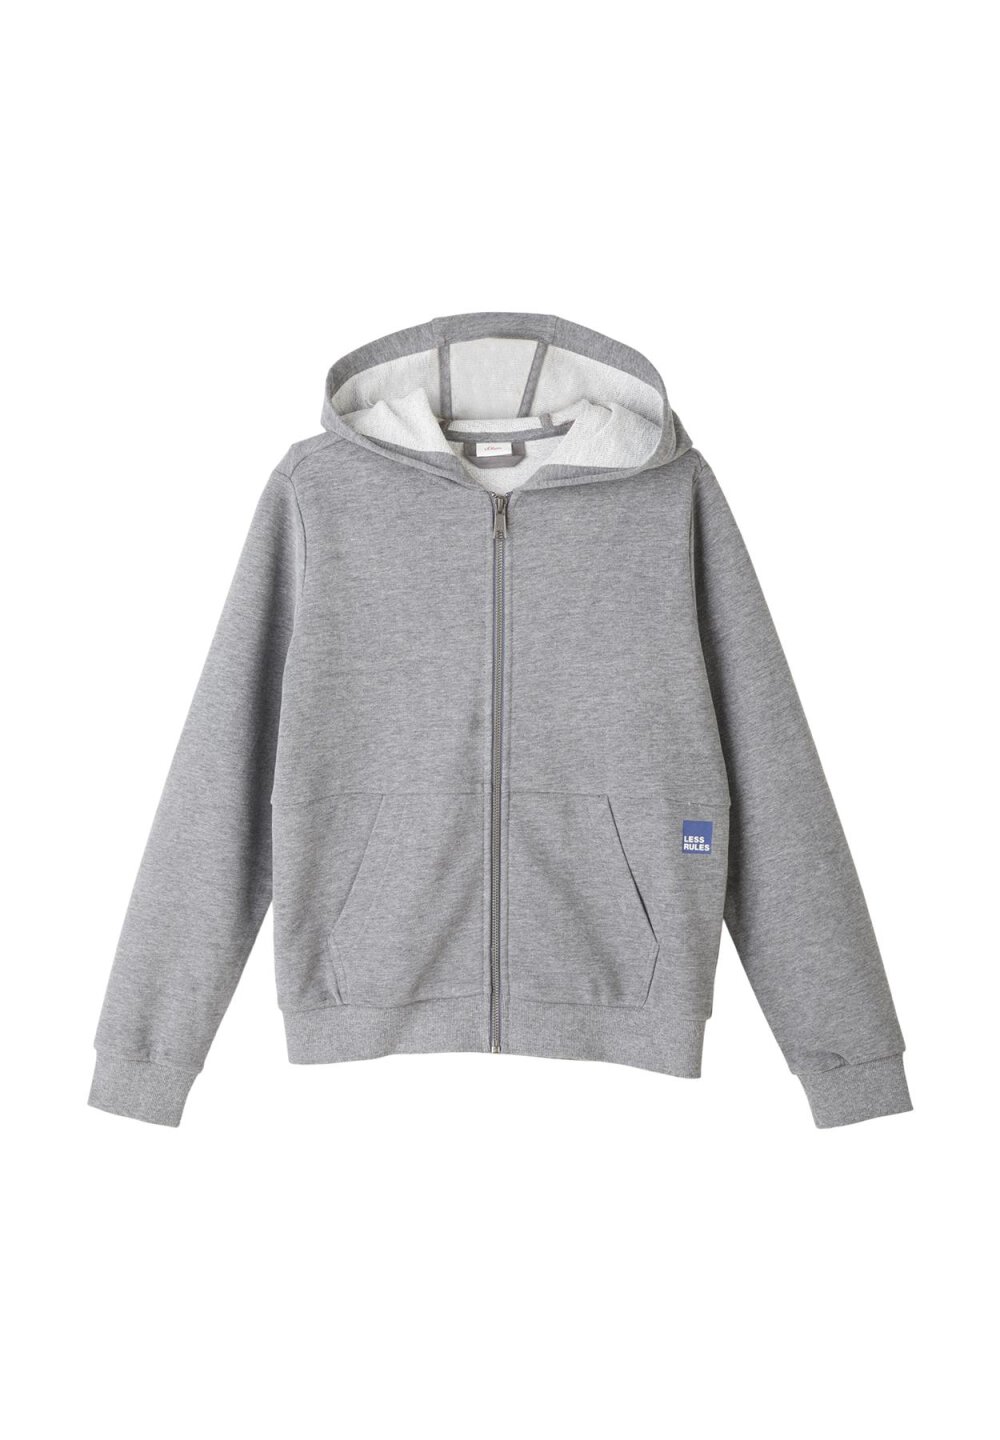 Sweatjacke mit Kapuze Grey/Black 152, 39,99 € | Sweatshirts